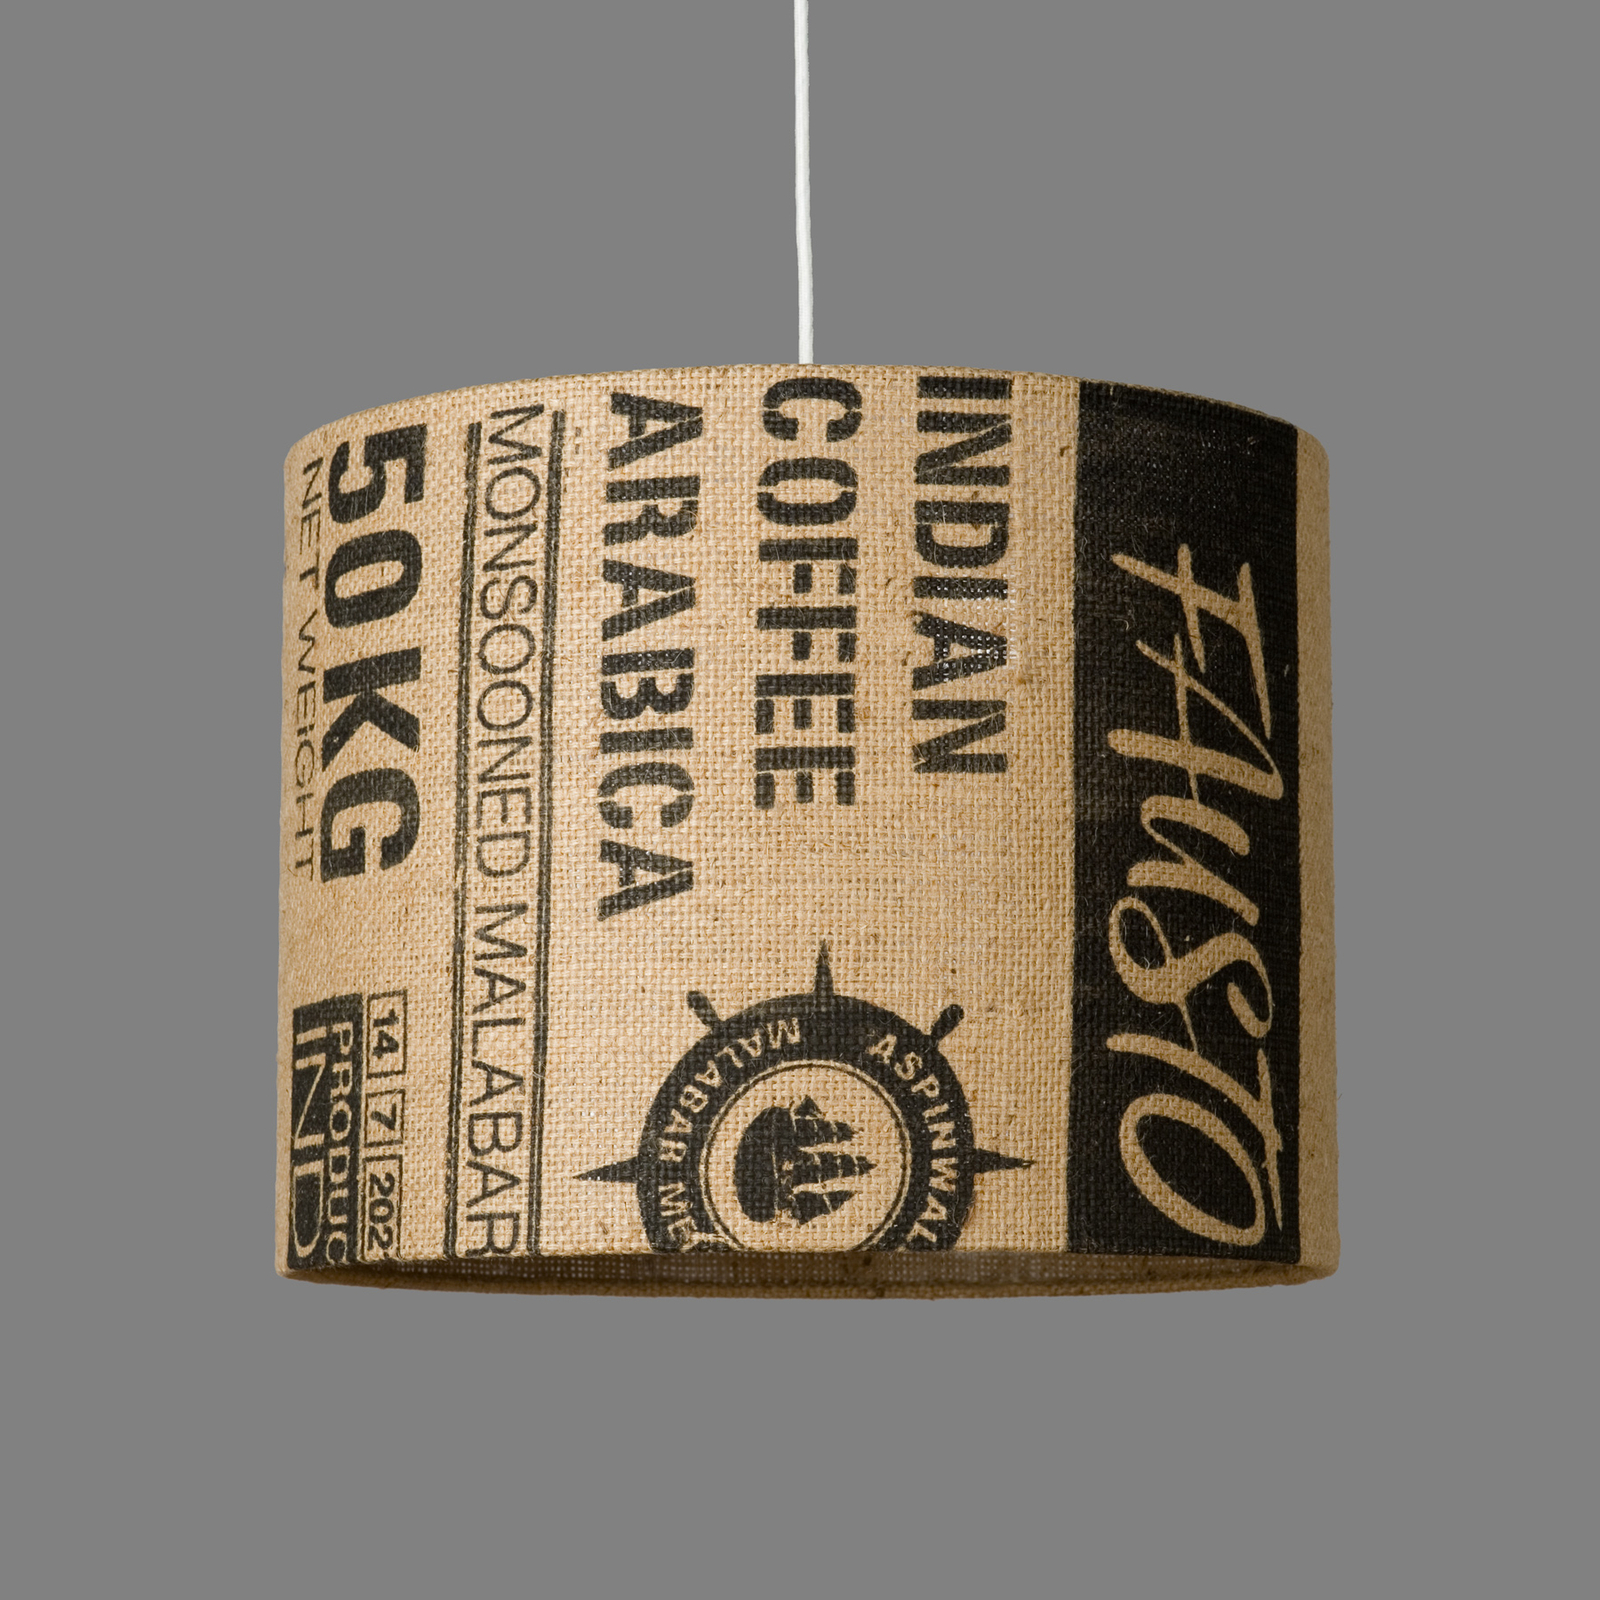 Hanglamp N°93 Perlbohne, kap van koffiezak